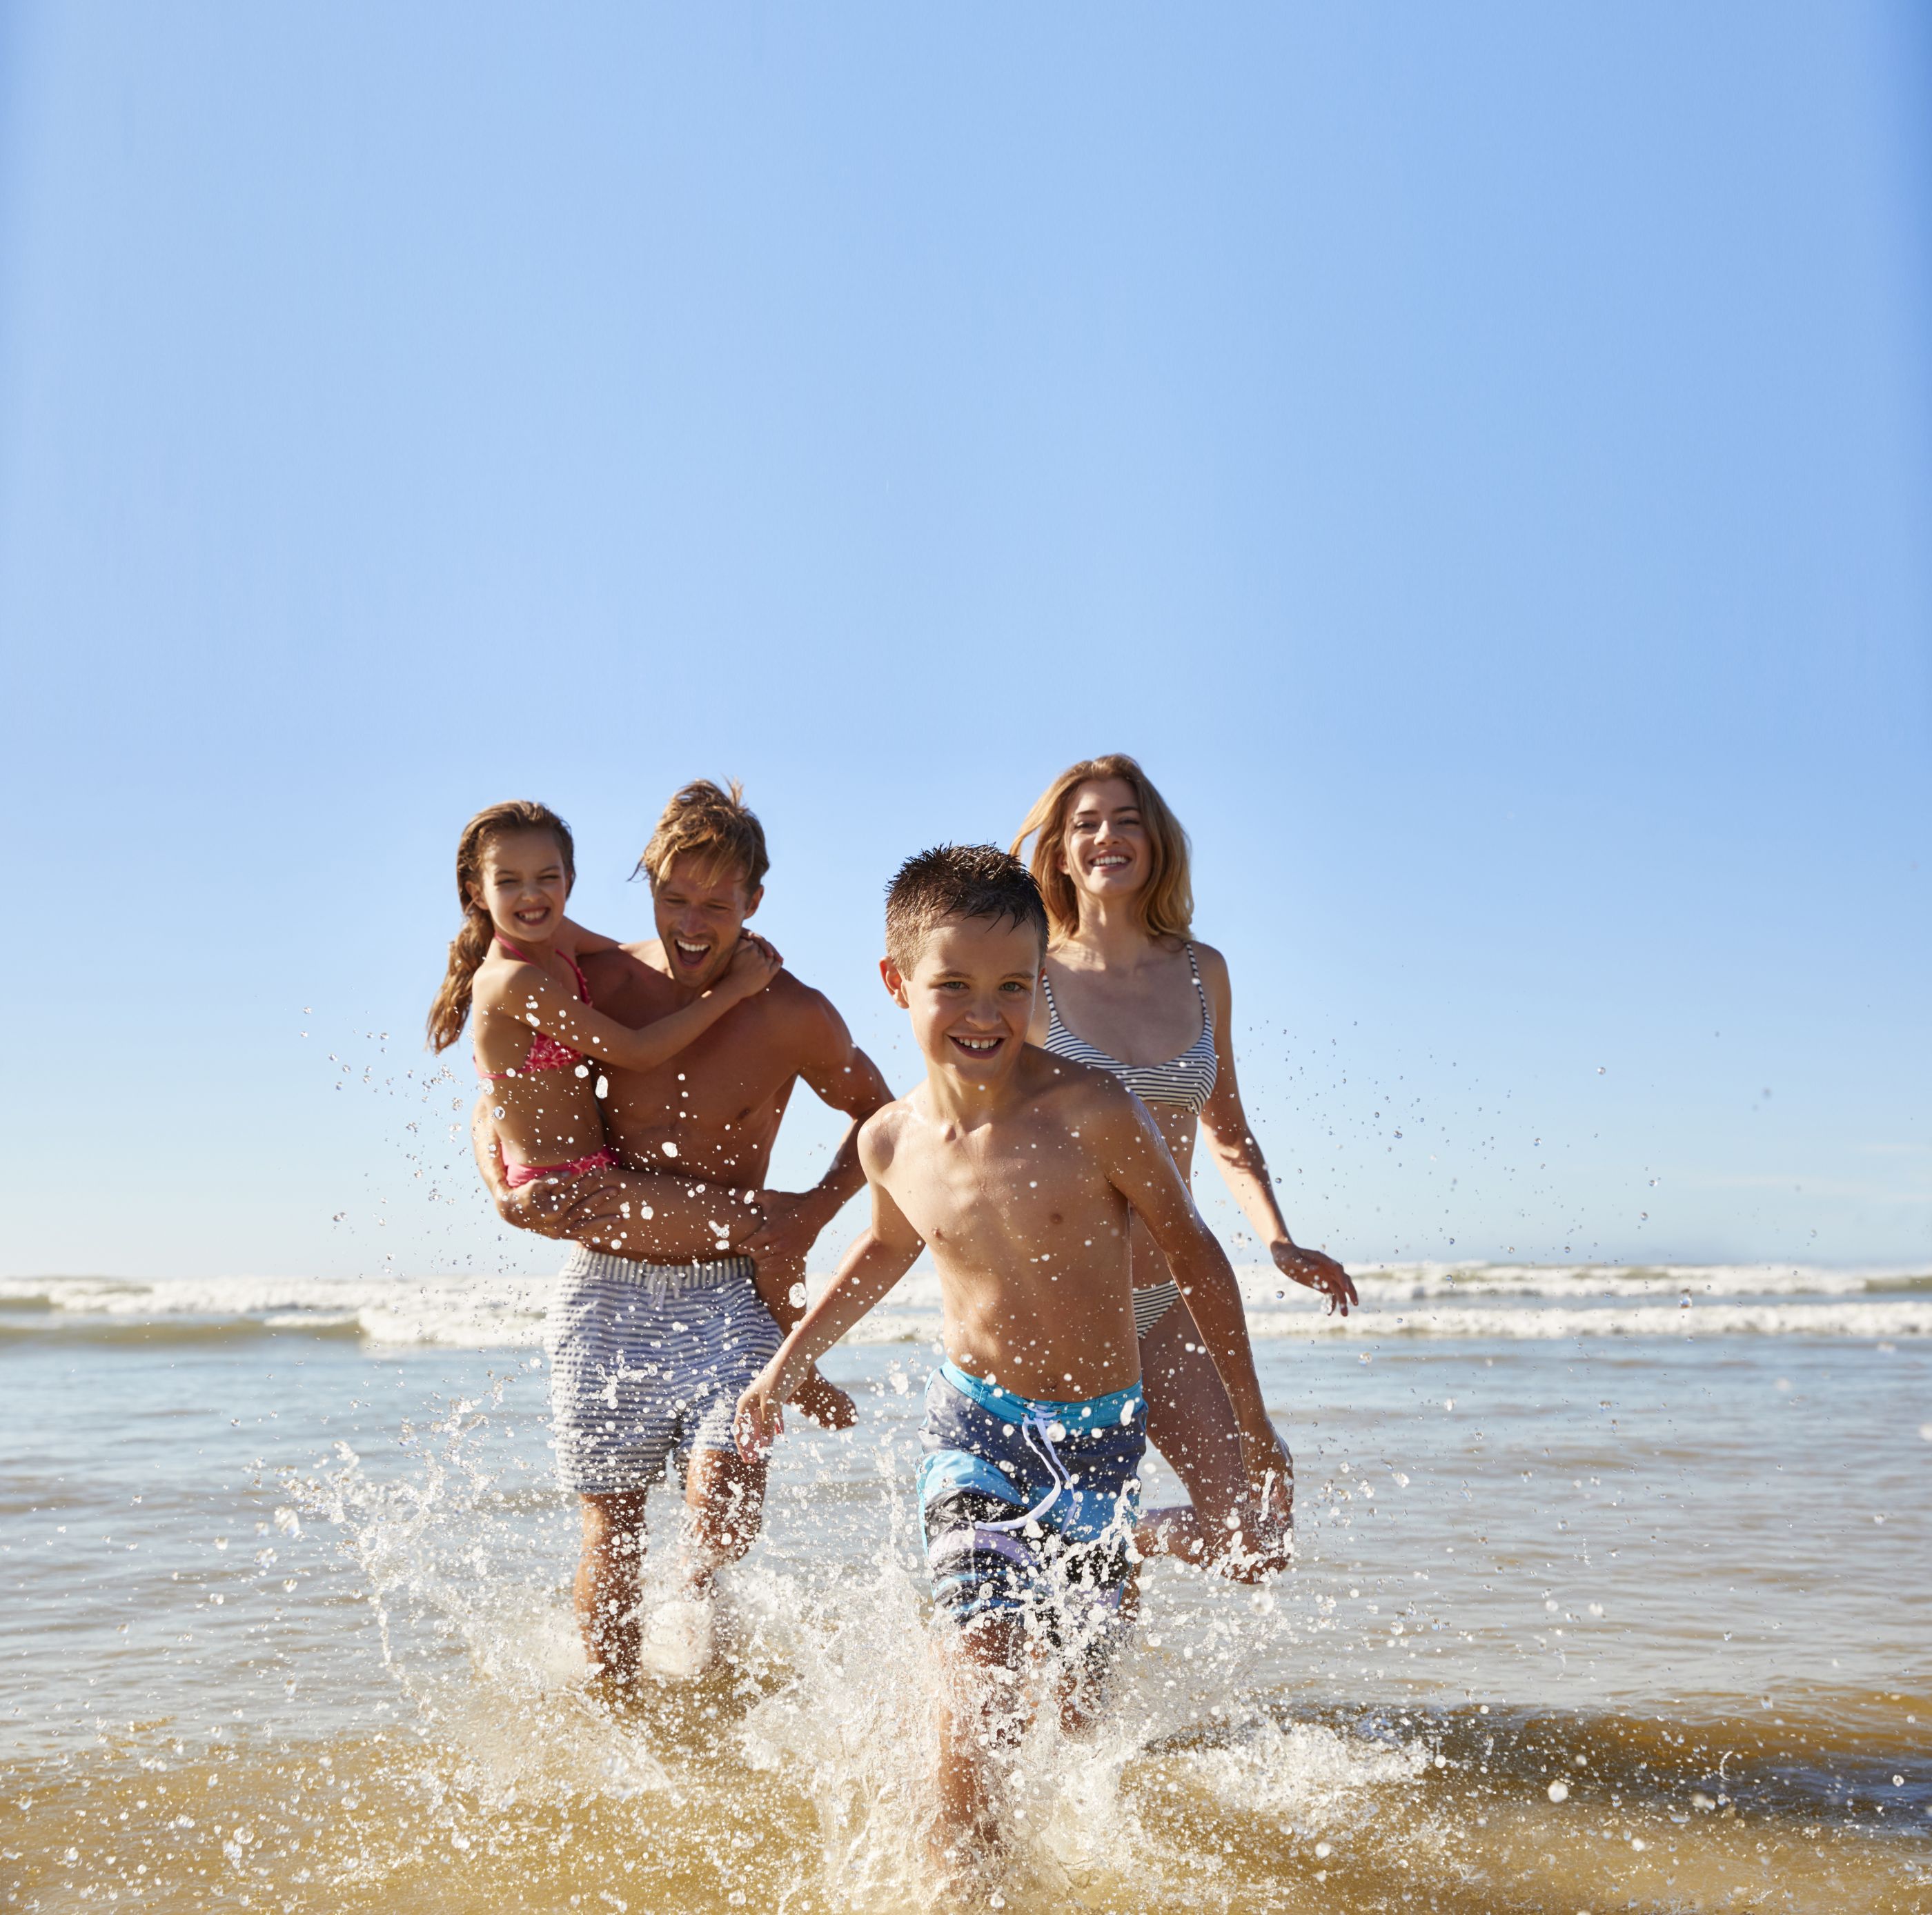 strand-vakantie-zee-gezin-zomer02.jpg